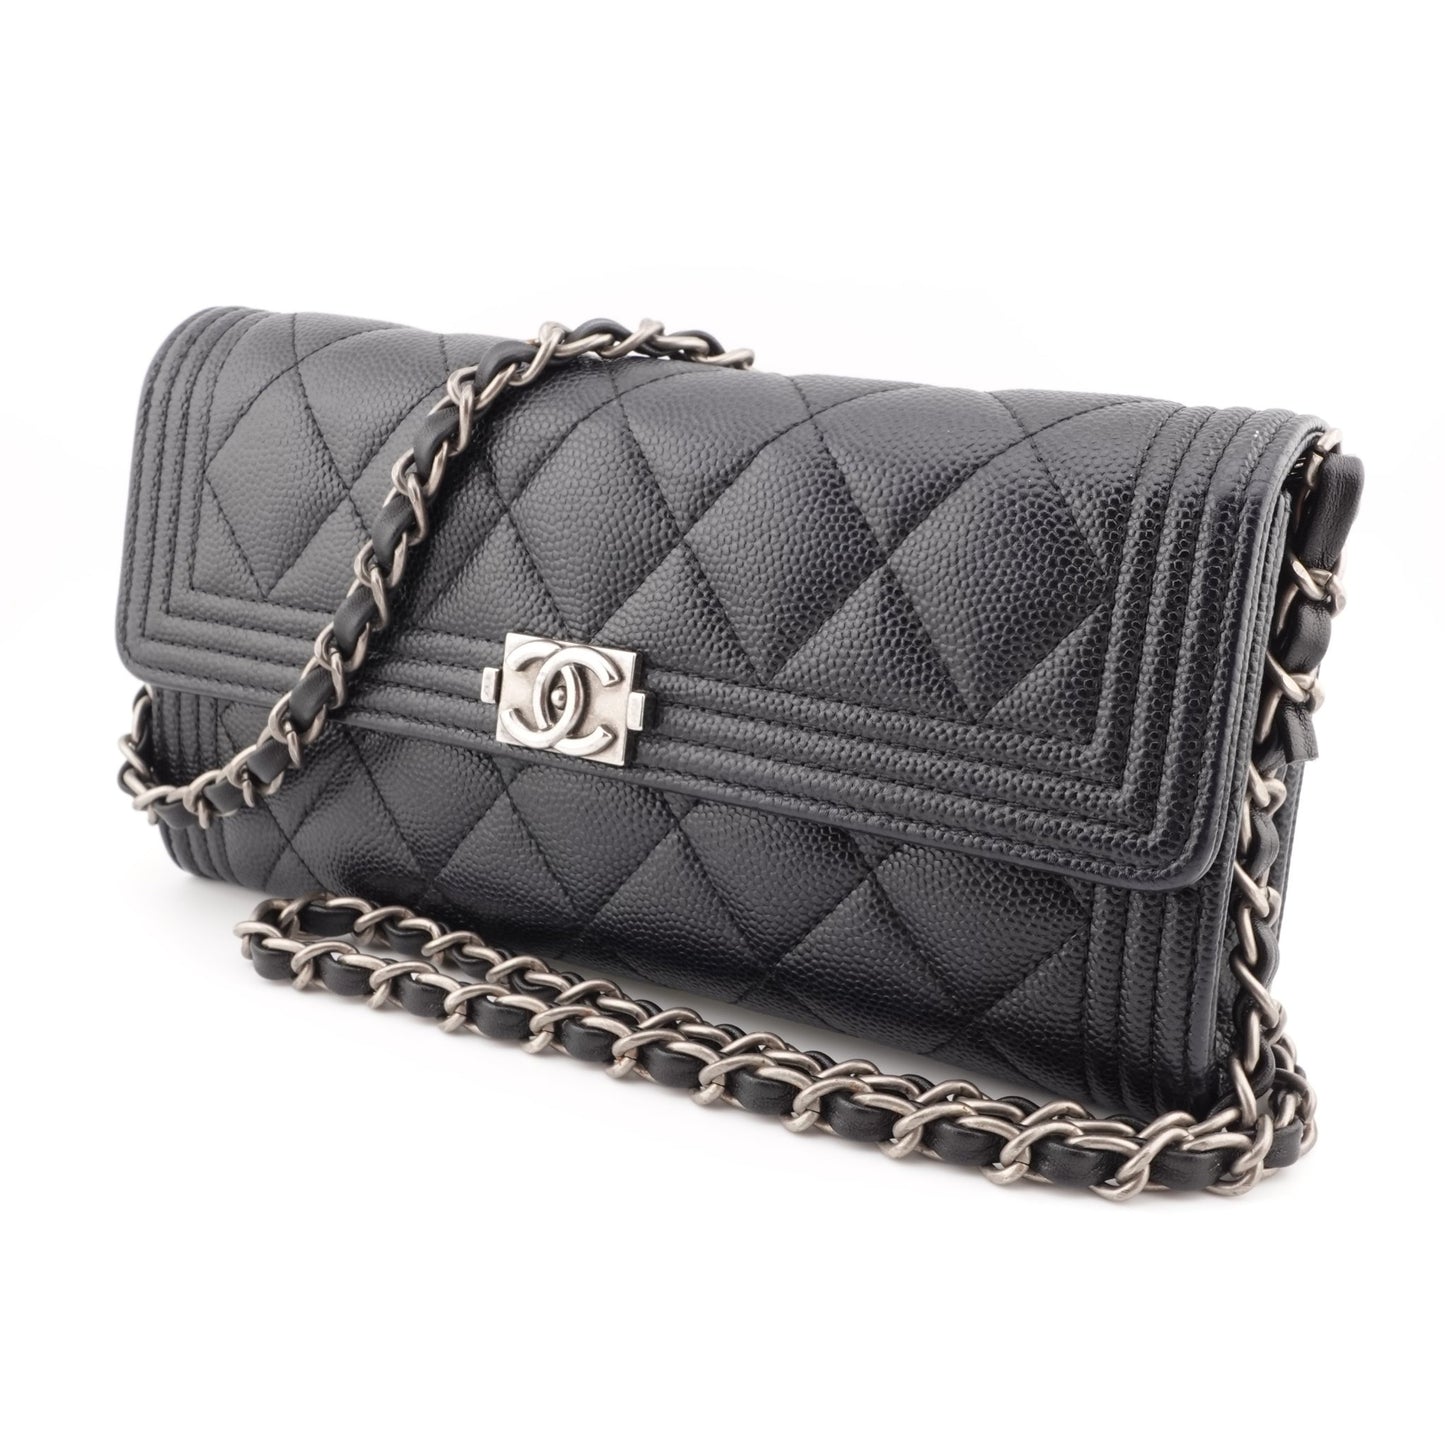 CHANEL Caviar Boy Long Flap Wallet on Chain - Bag Envy